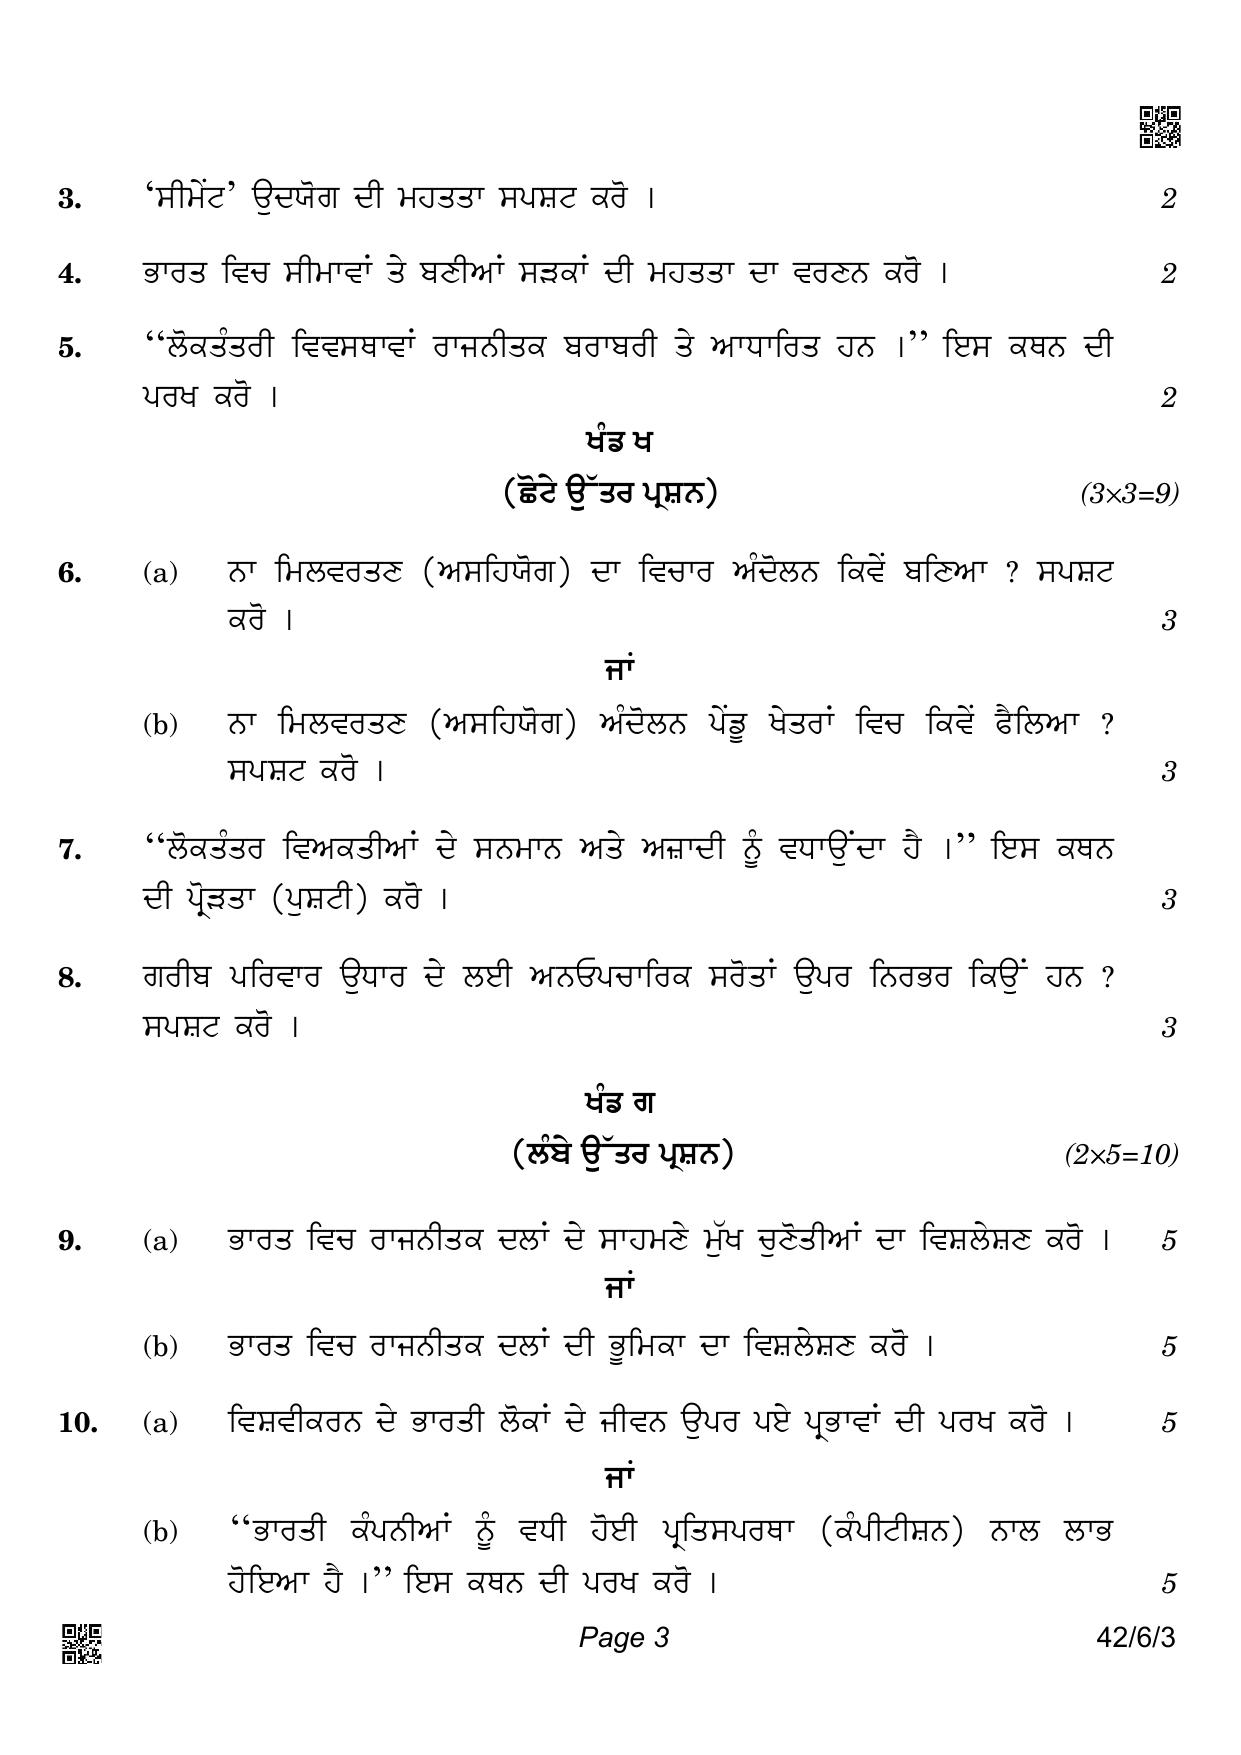 CBSE Class 10 42-6-3_Social Science Punjabi Version 2022 Compartment Question Paper - Page 3